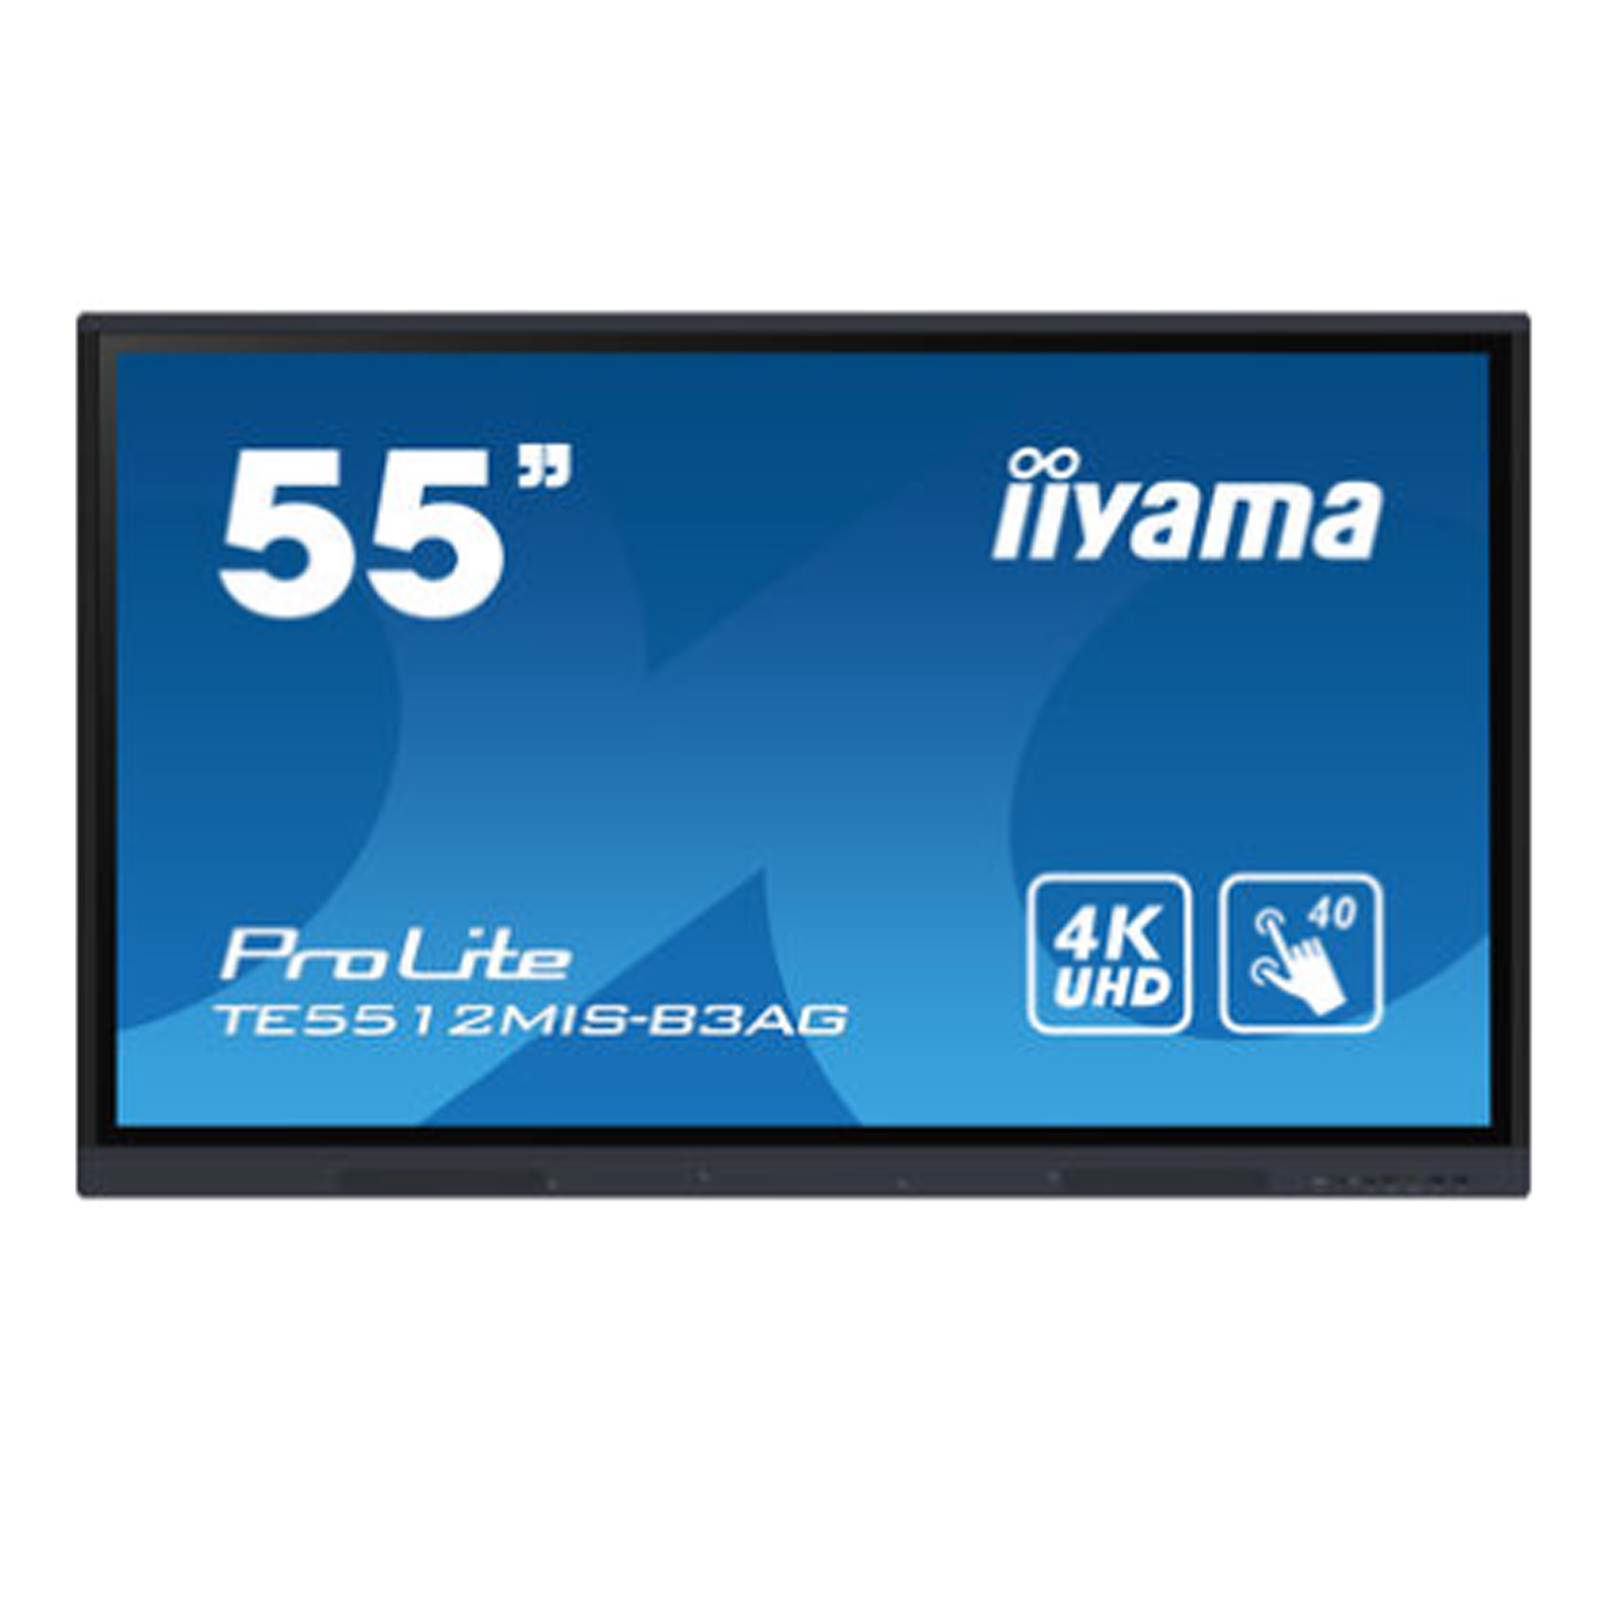 Monitor 55" LCD touchscreen iiyama